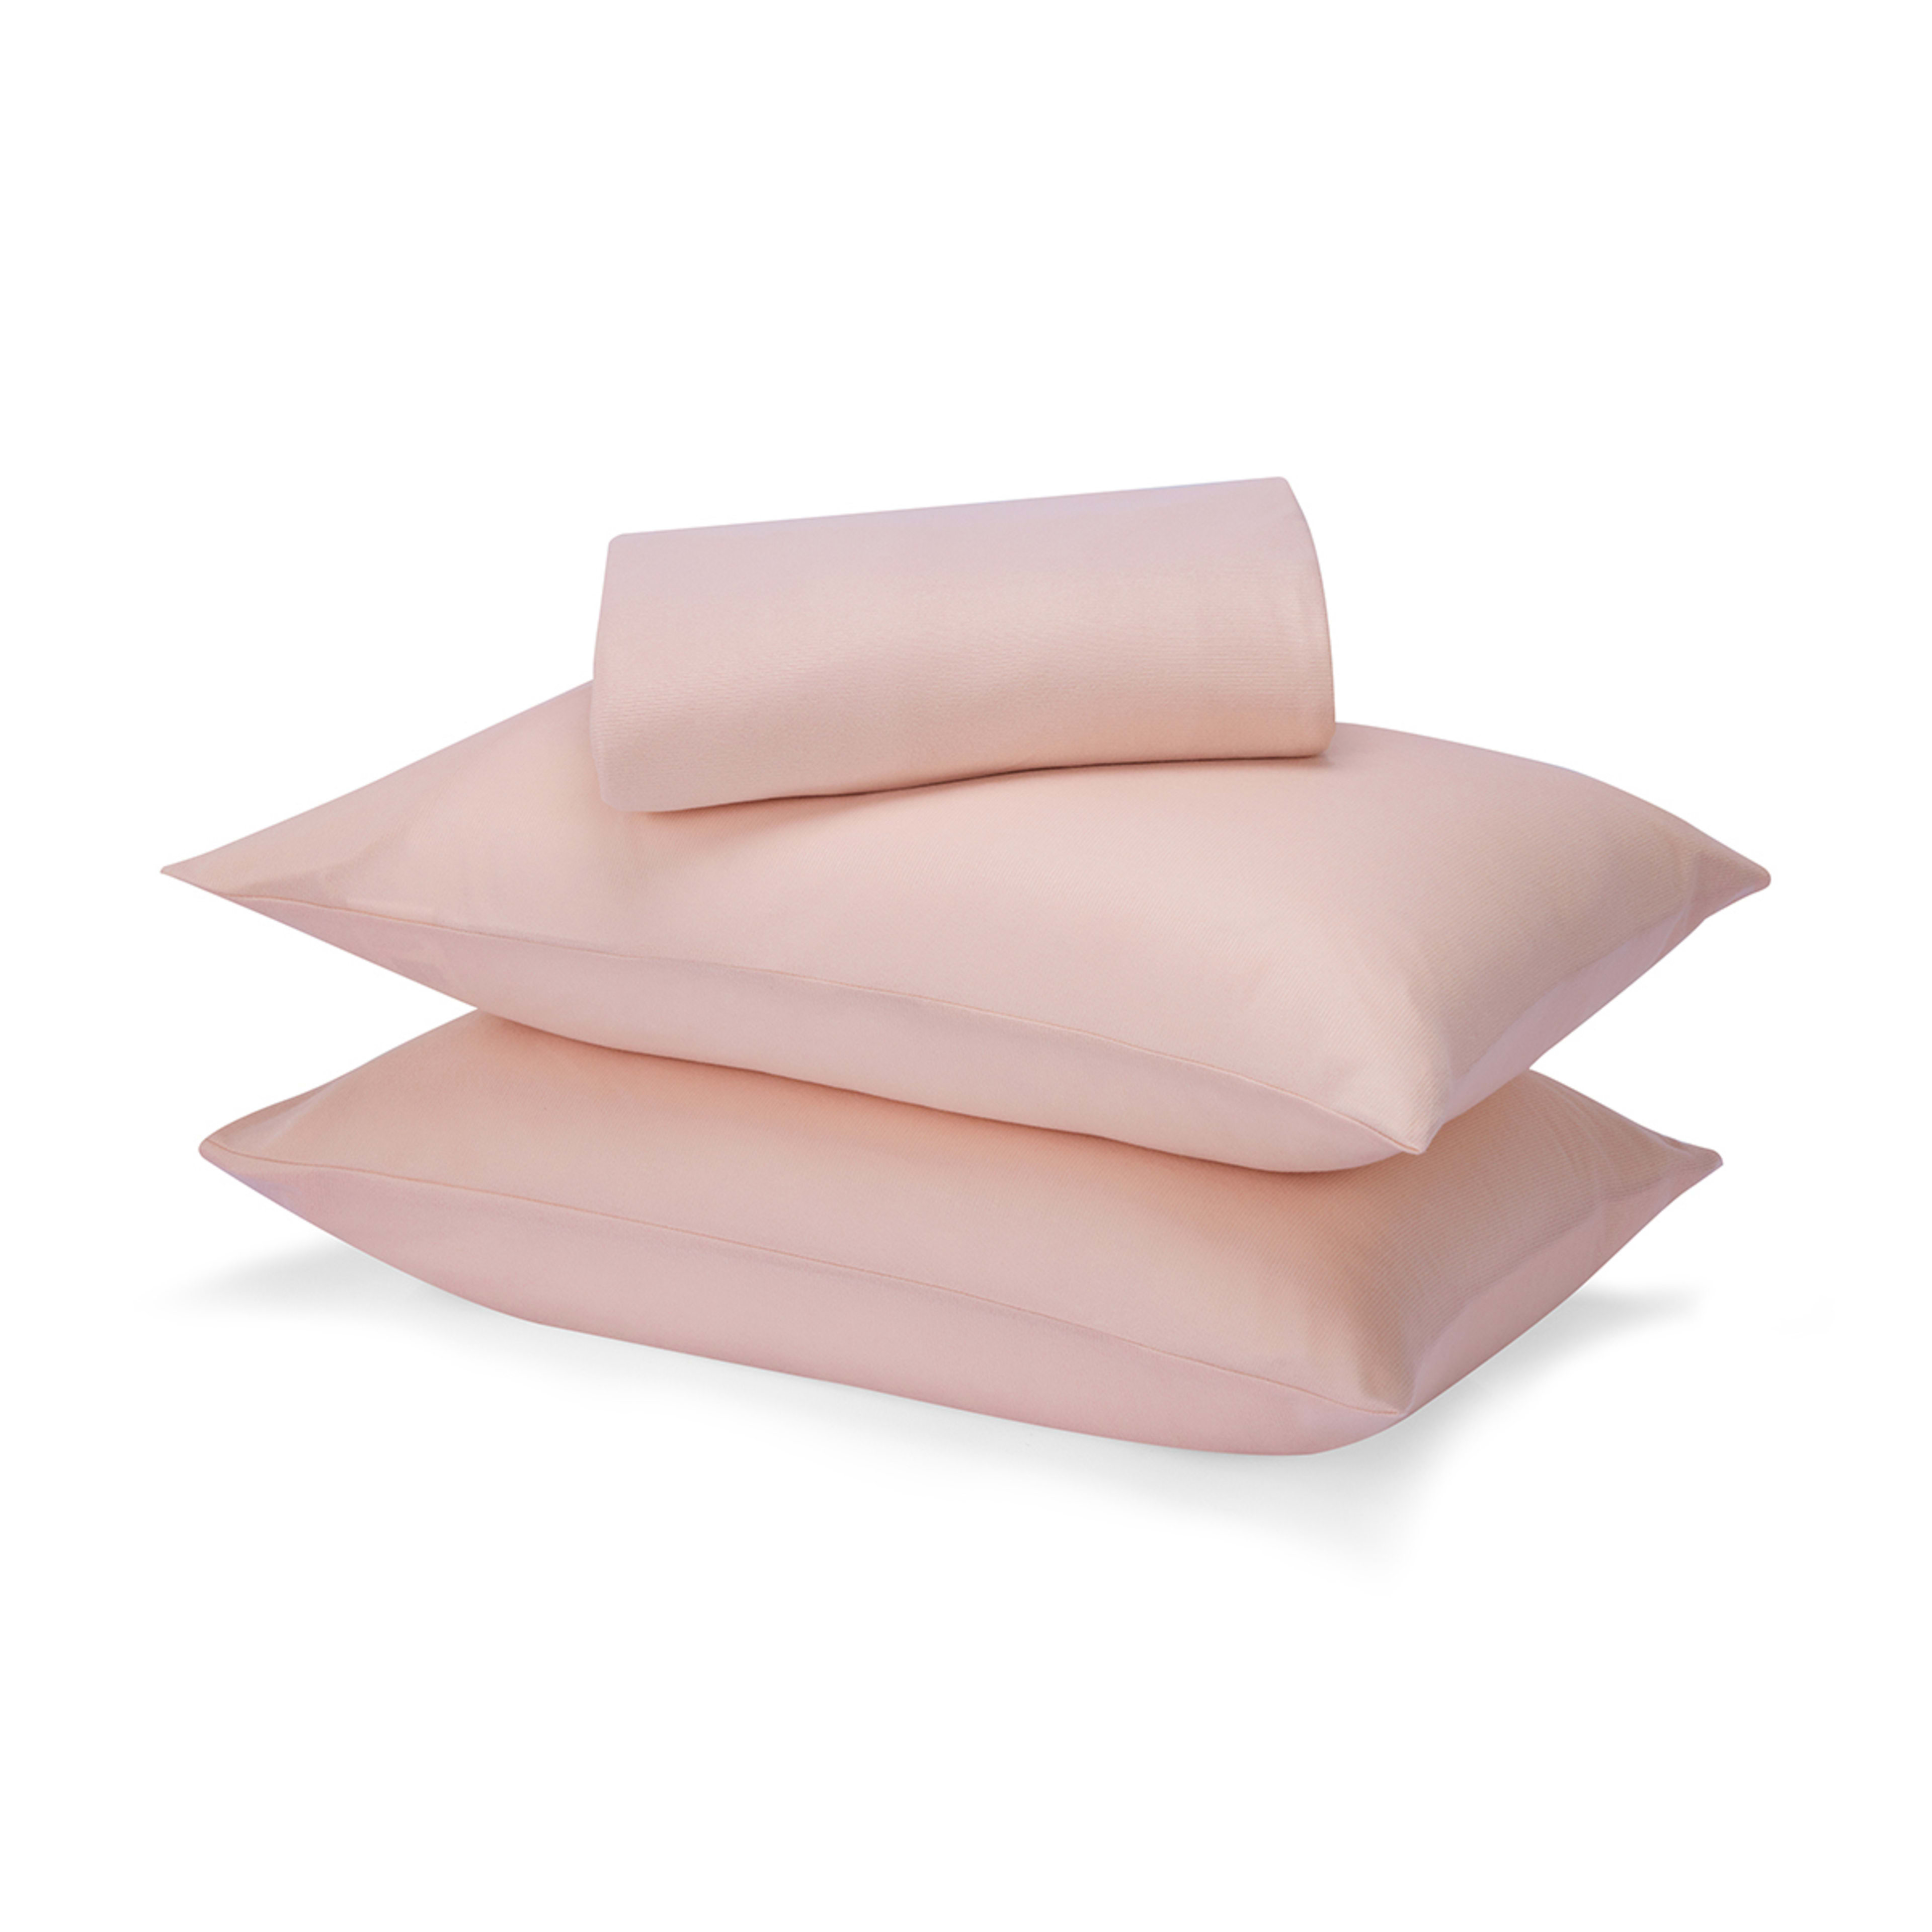 Soft Touch Sheet Set - Queen Bed, Pink